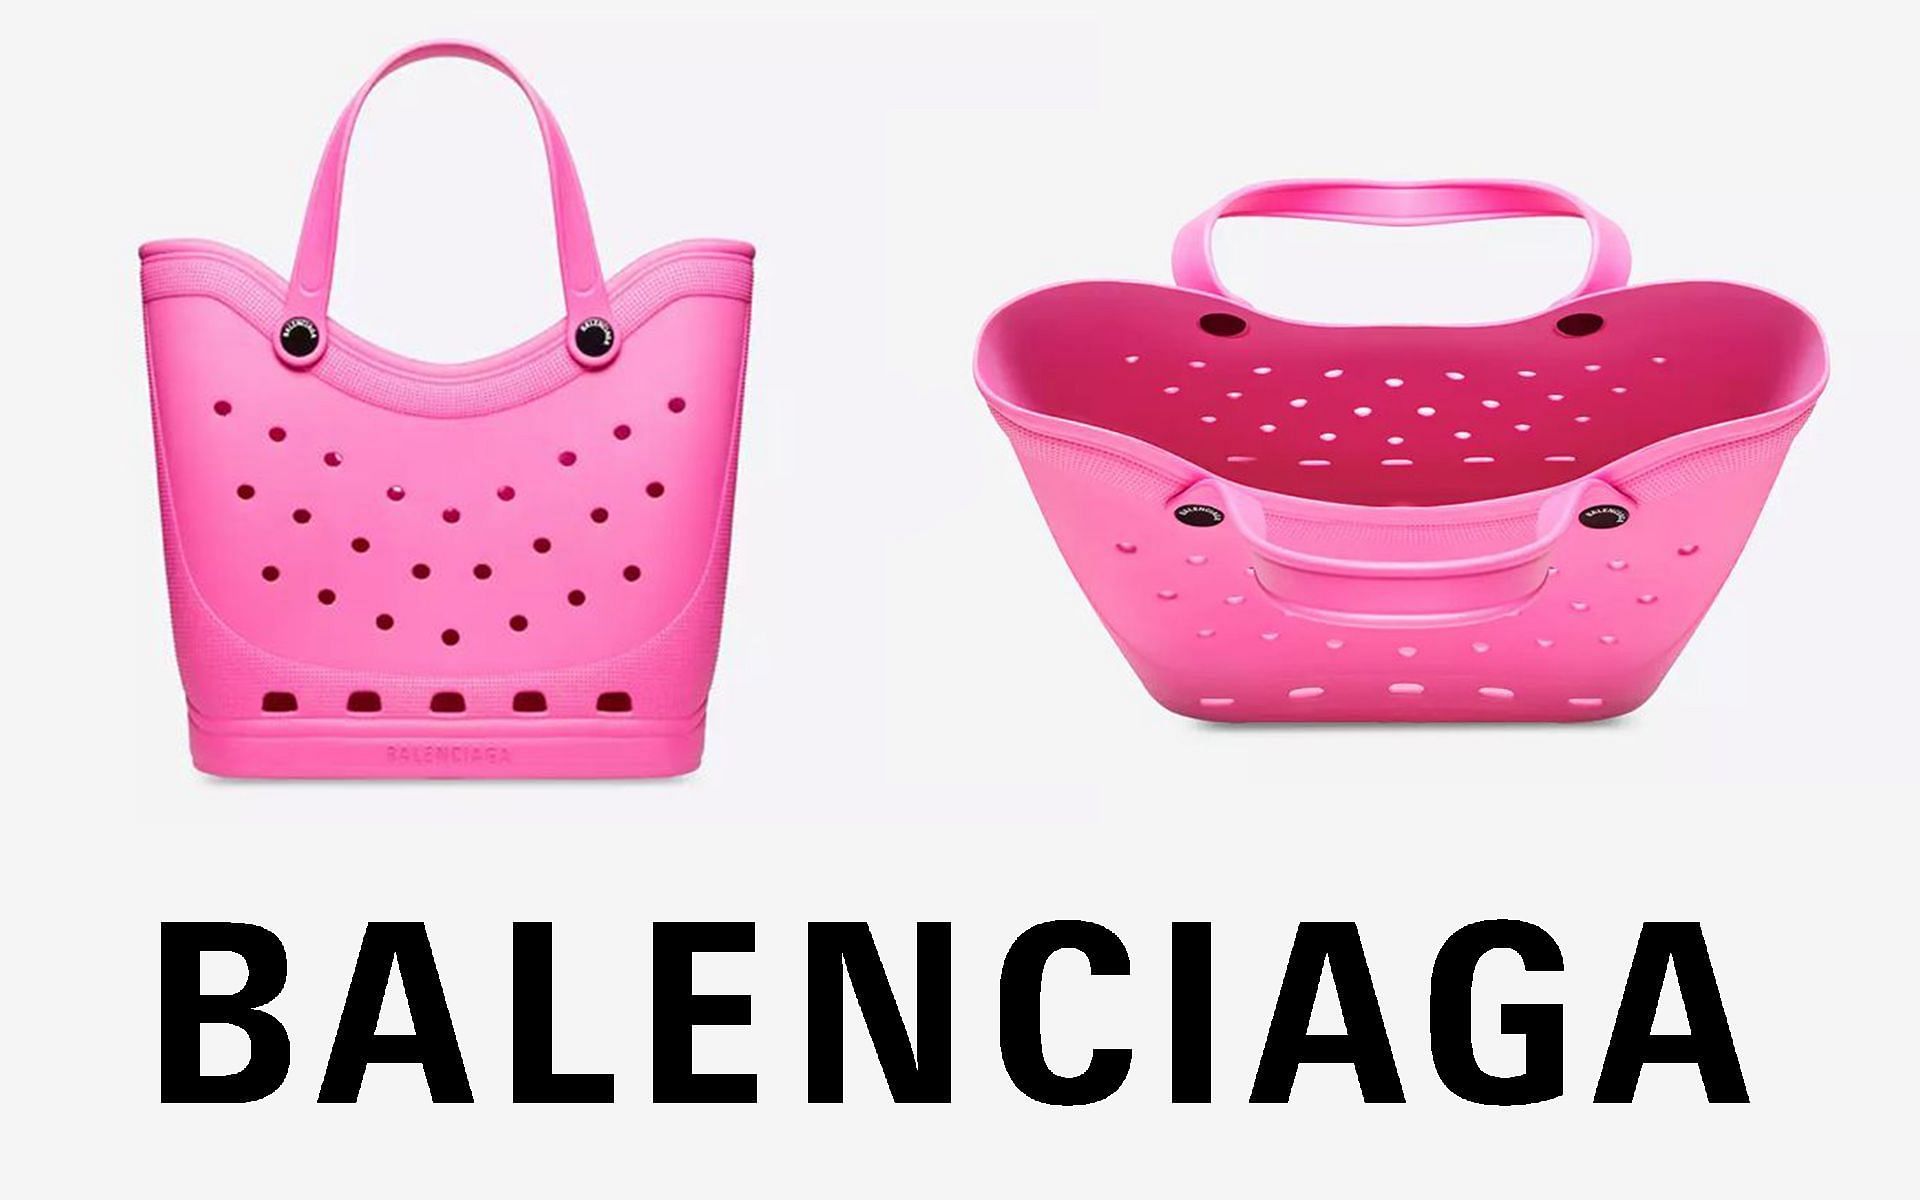 Balenciaga Crocs bags are available for purchase (Image via Sportskeeda)